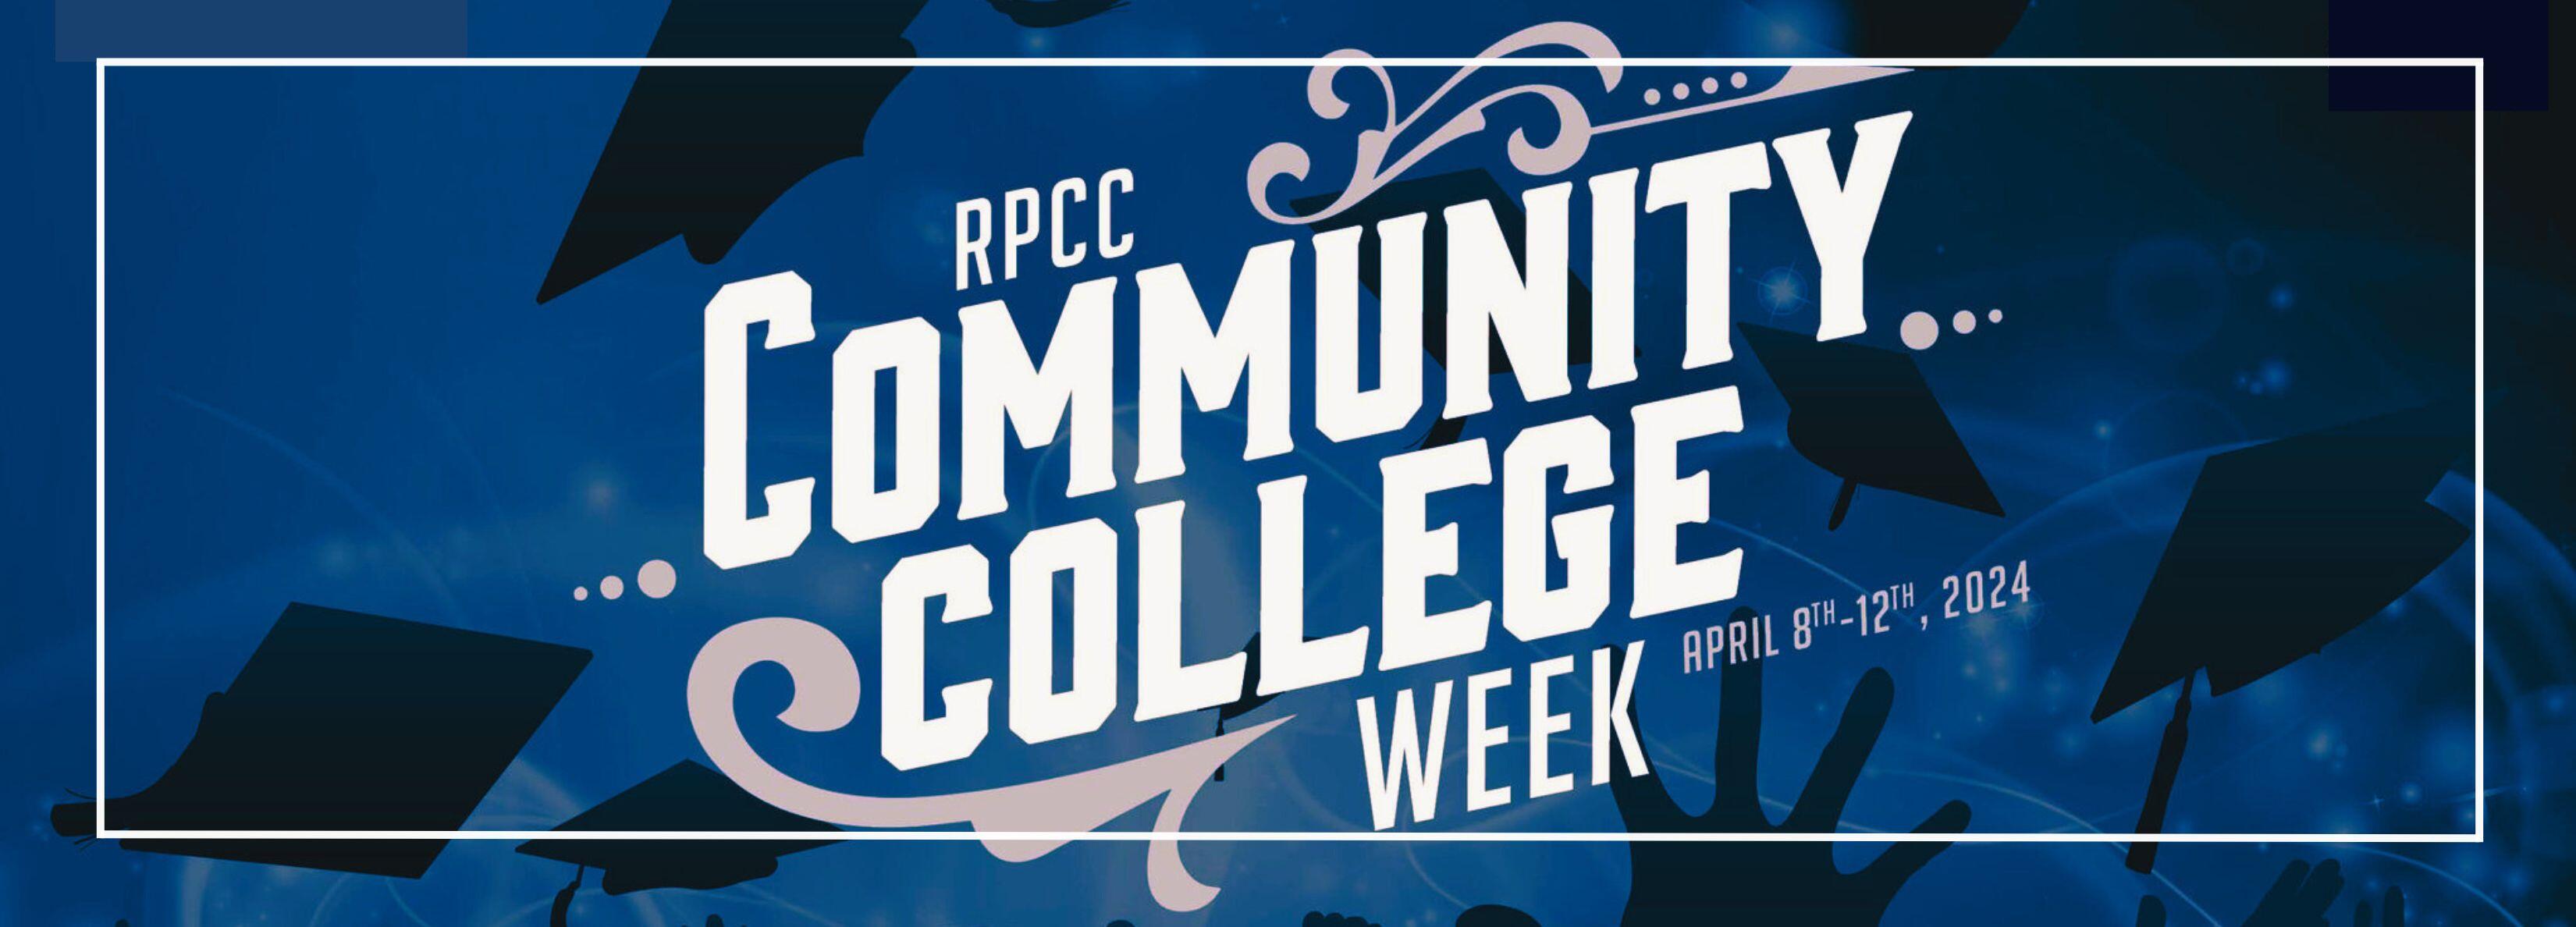 Community College Week Graphic